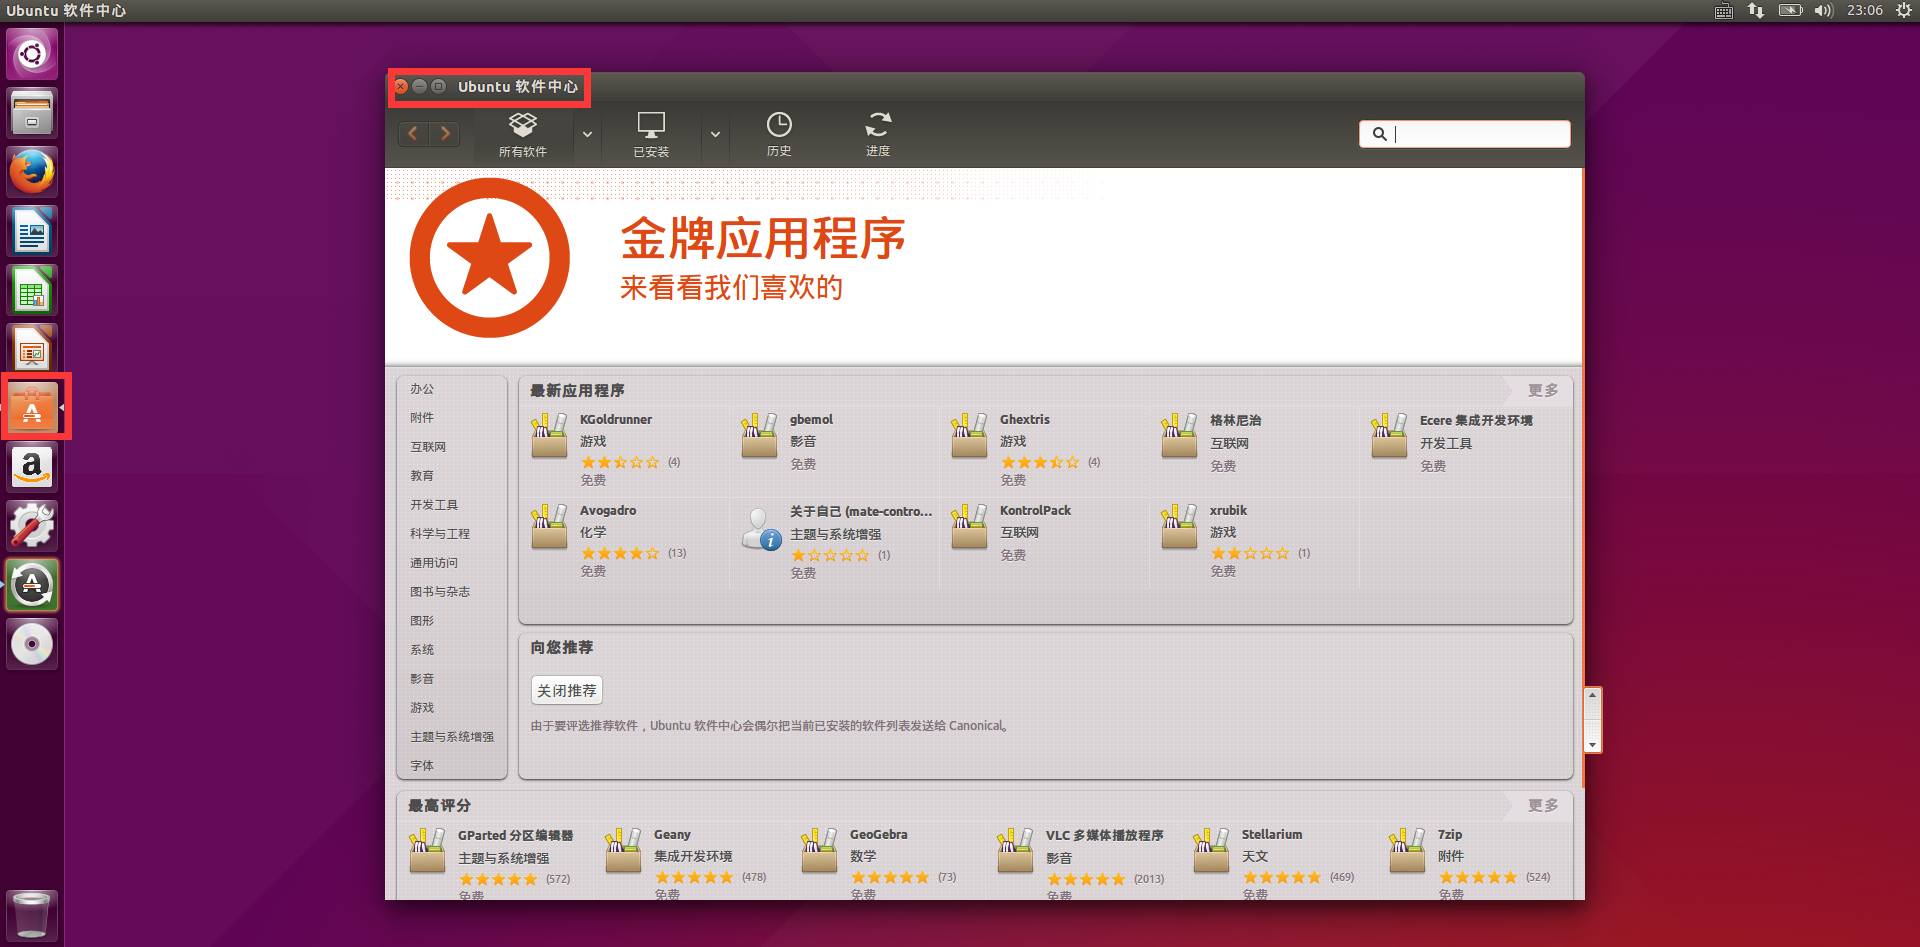 Ubuntu和Fedora上通过图形化界面或源码安装软件包的方法